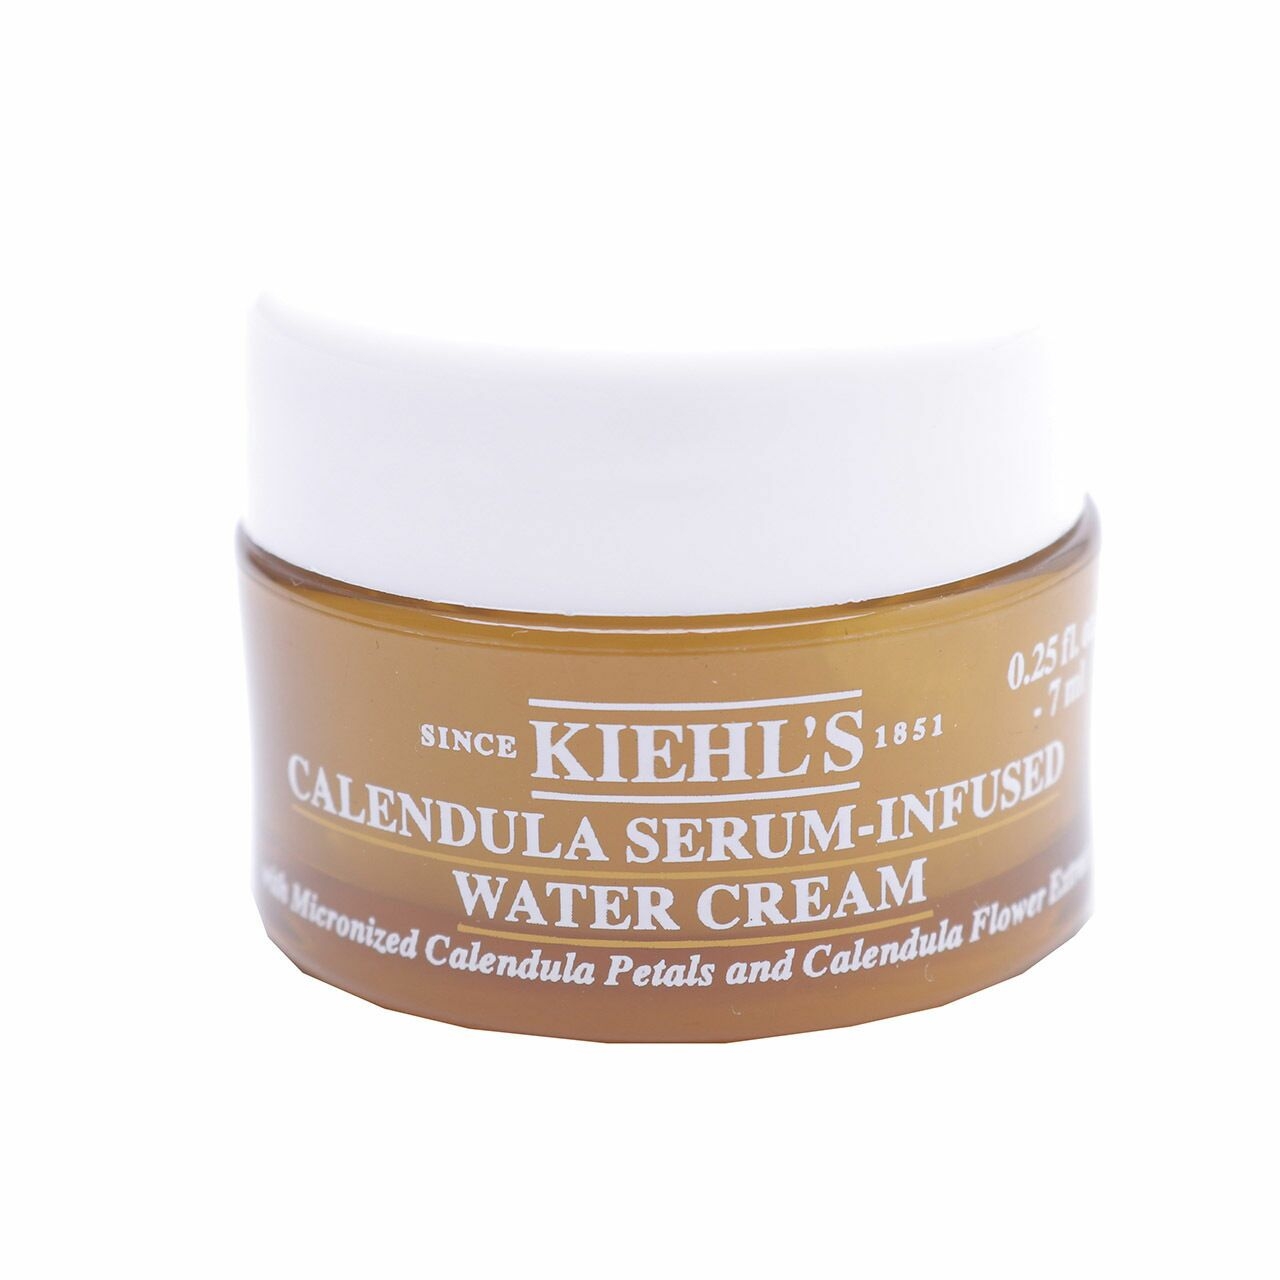 Kiehl's Calendula Serum-Infused Water Cream Skin Care